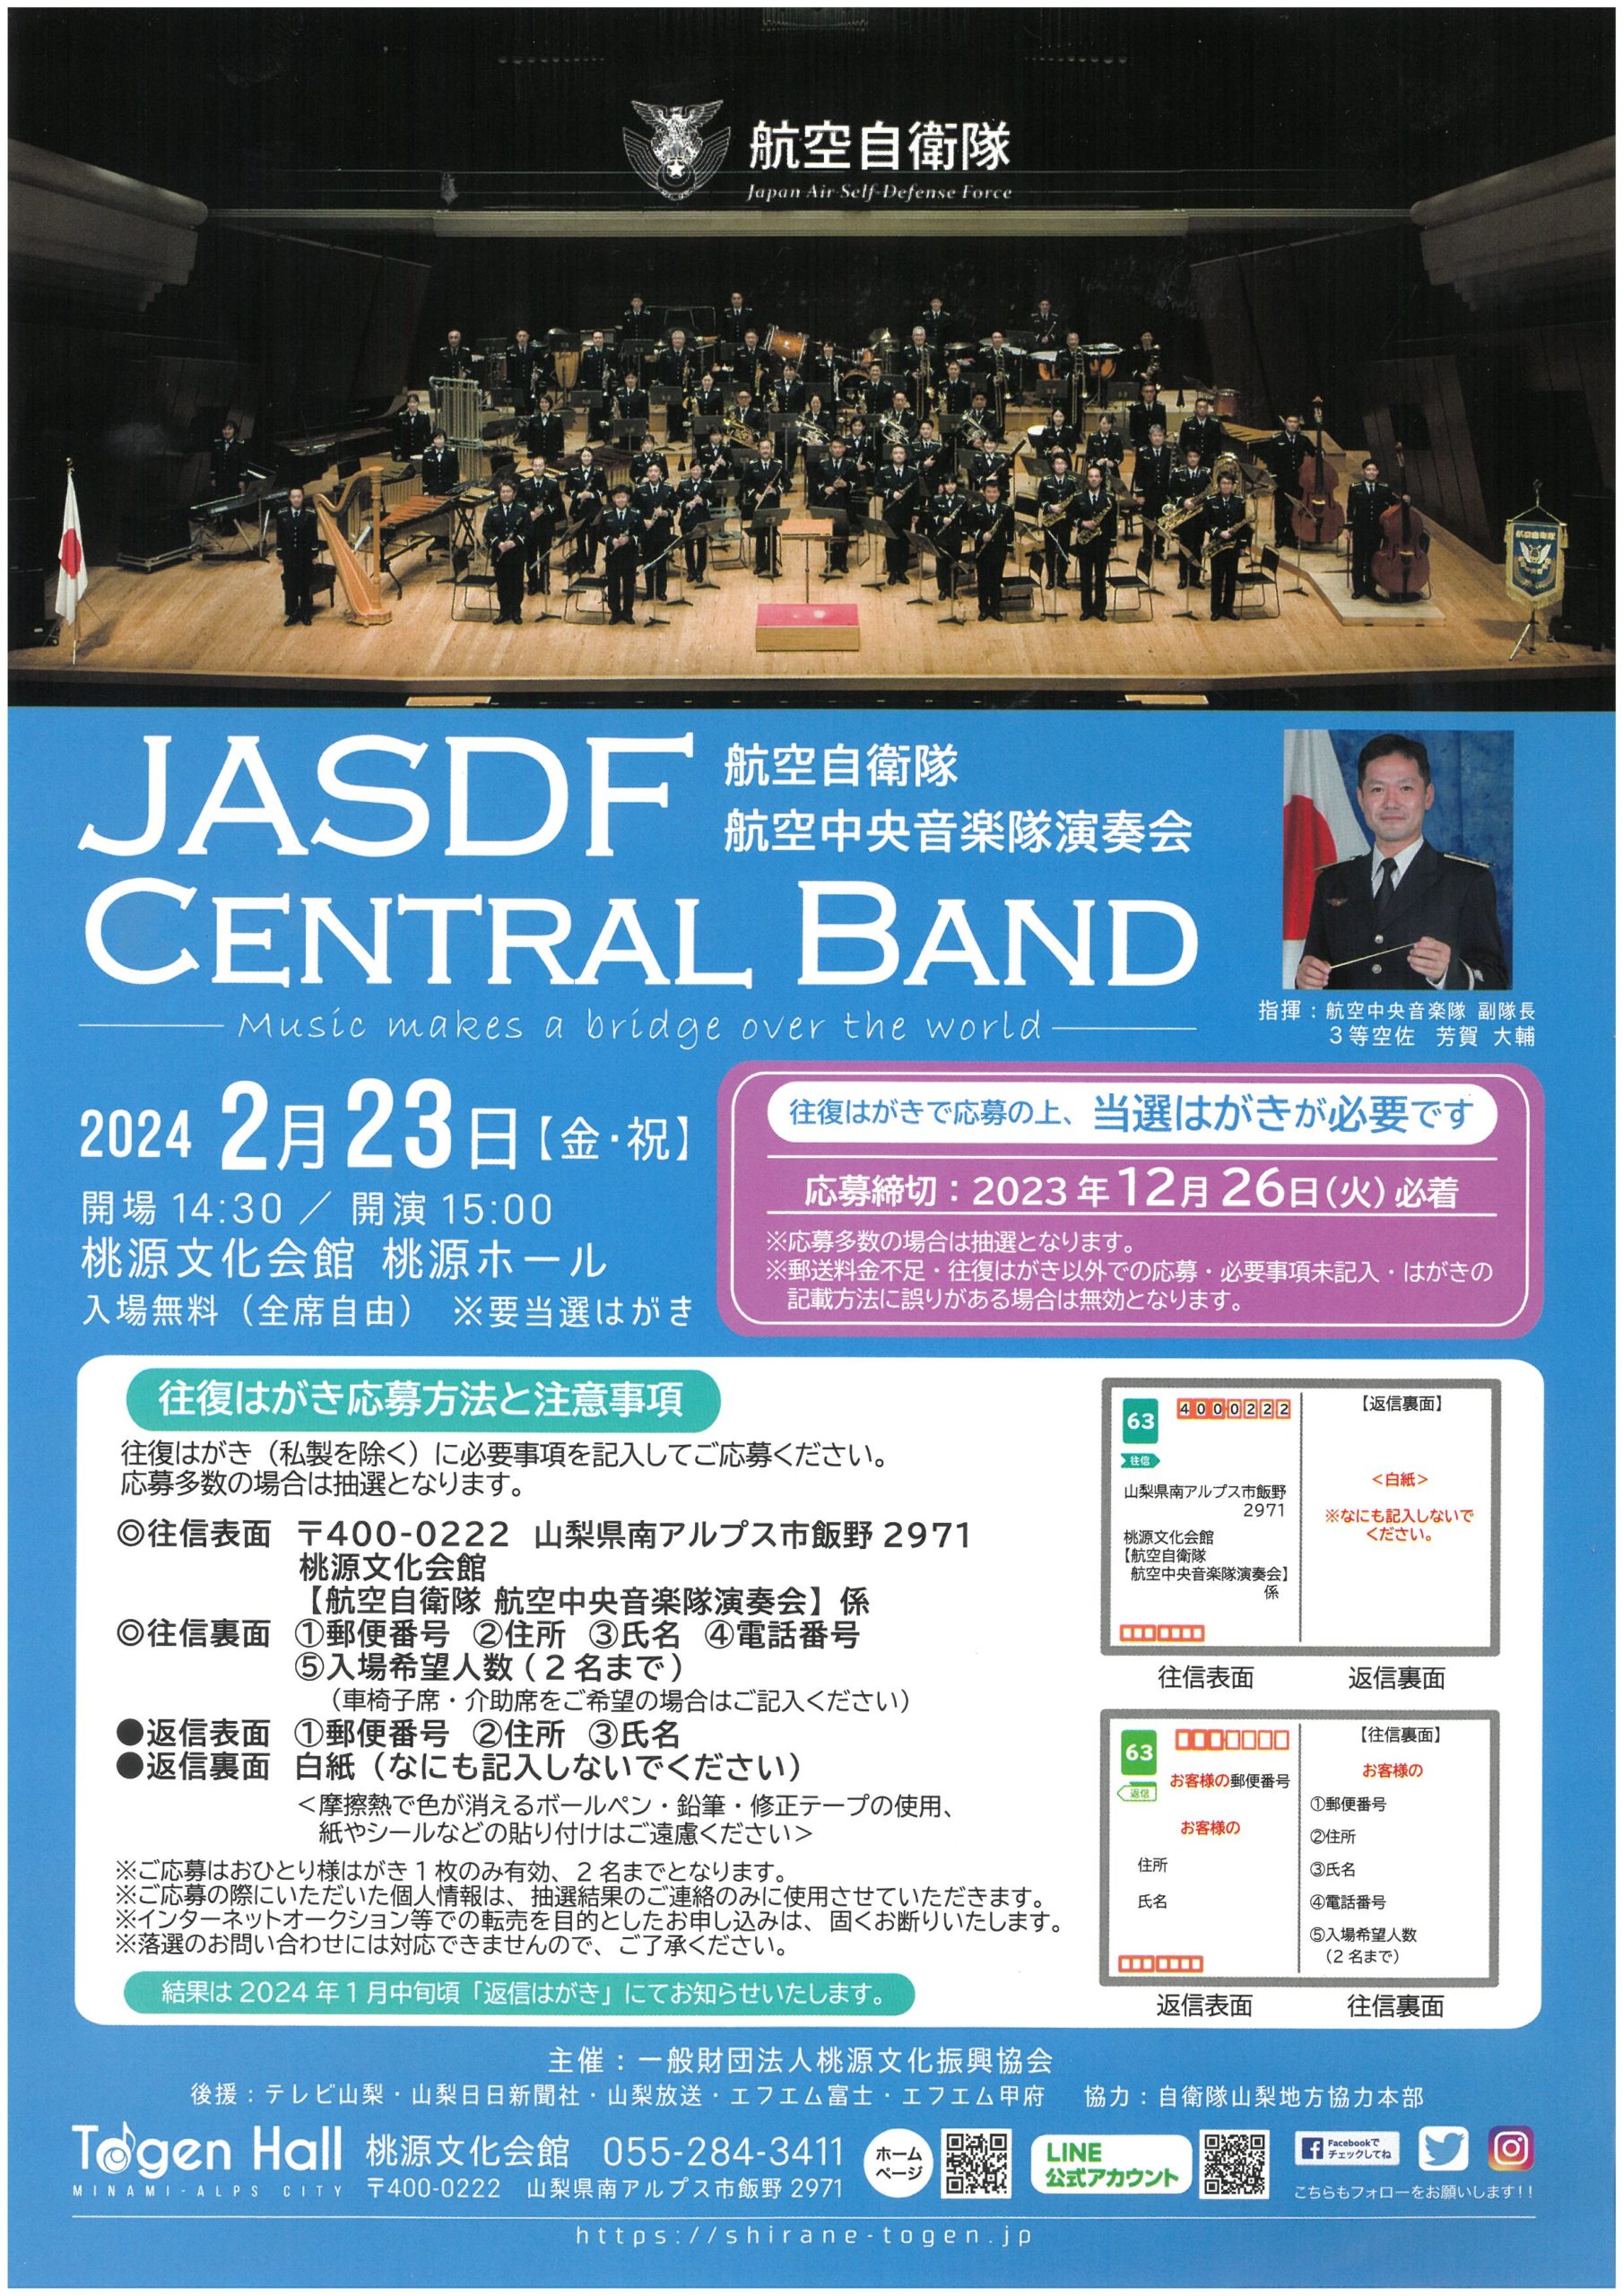 【JASDF CENTRAL BAND】航空自衛隊 航空中央音楽隊演奏会